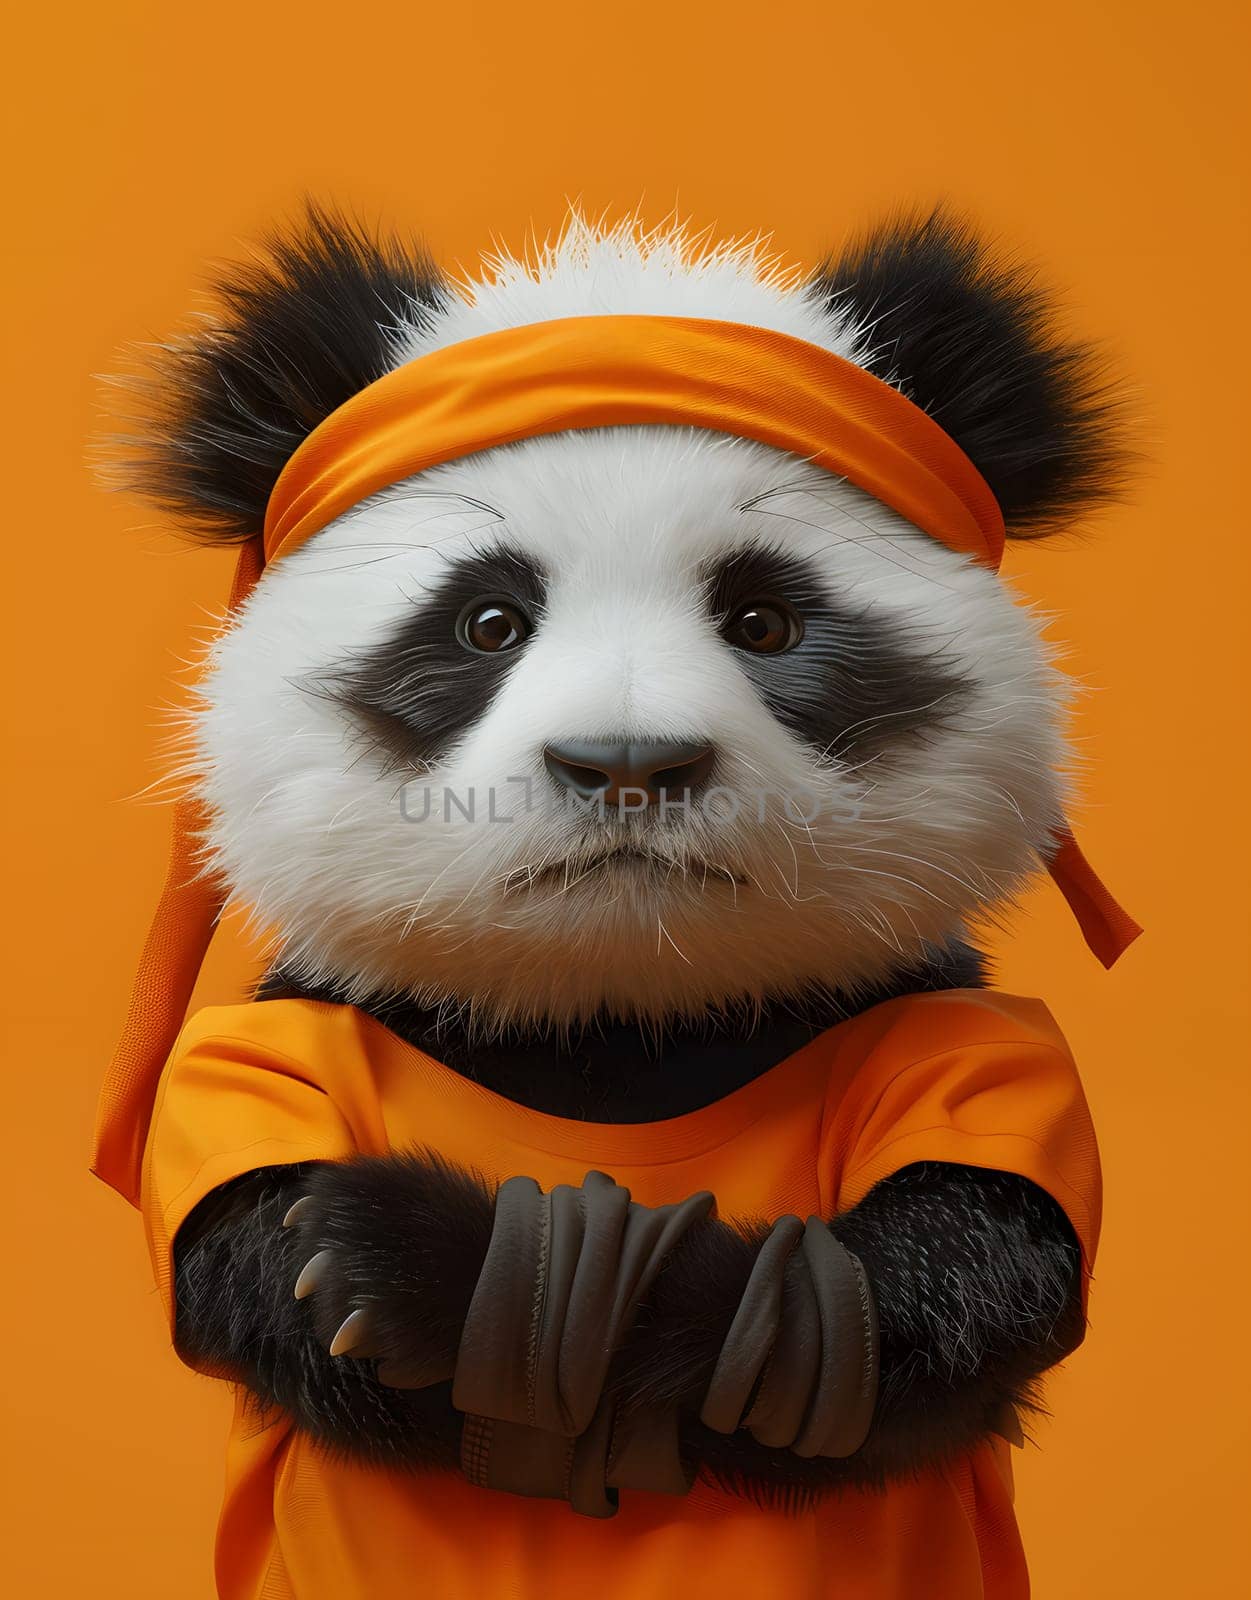 Red panda with orange fur, wearing an orange shirt and headband by Nadtochiy